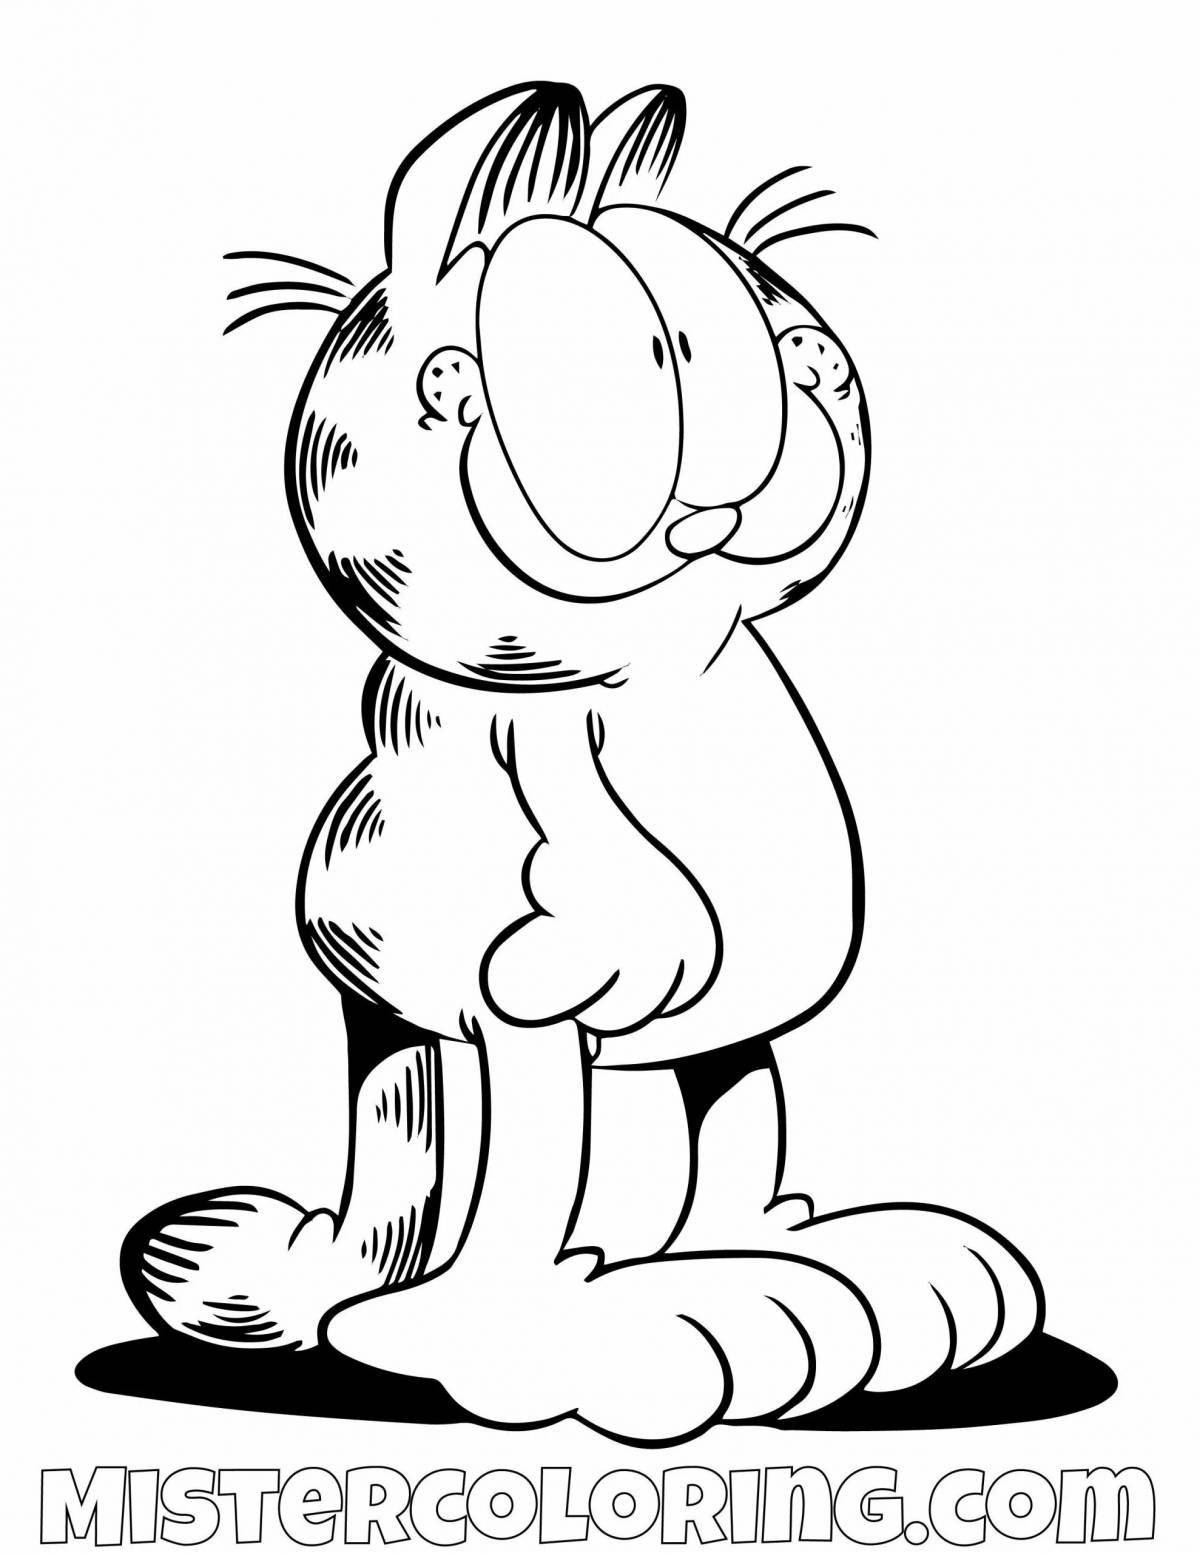 Garfield funny coloring book